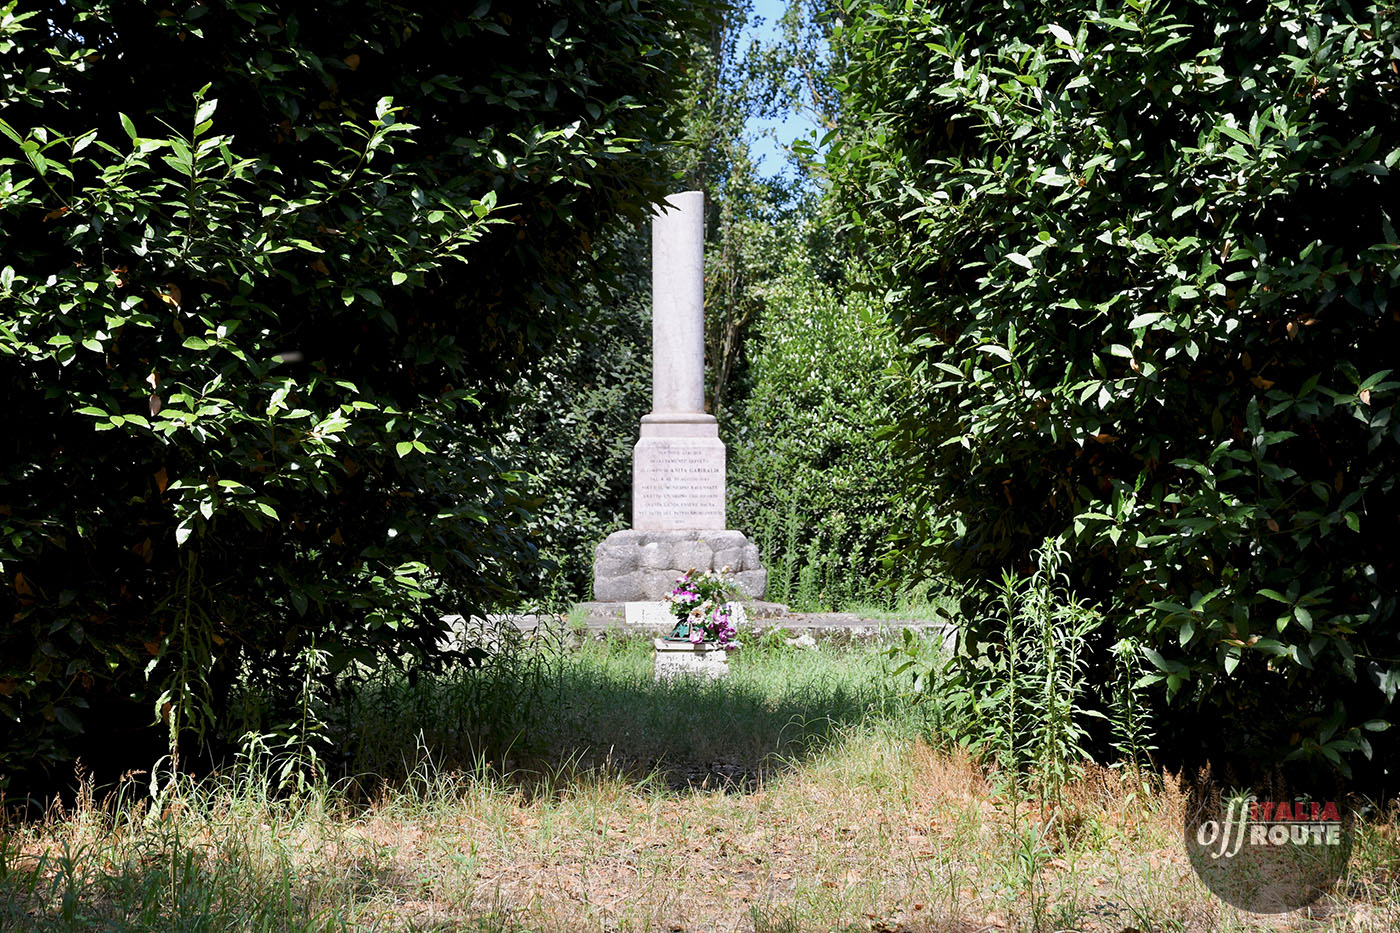 La stele a ricordo del punto dove fu sepolta, dopo la morte, Anita Garibaldi